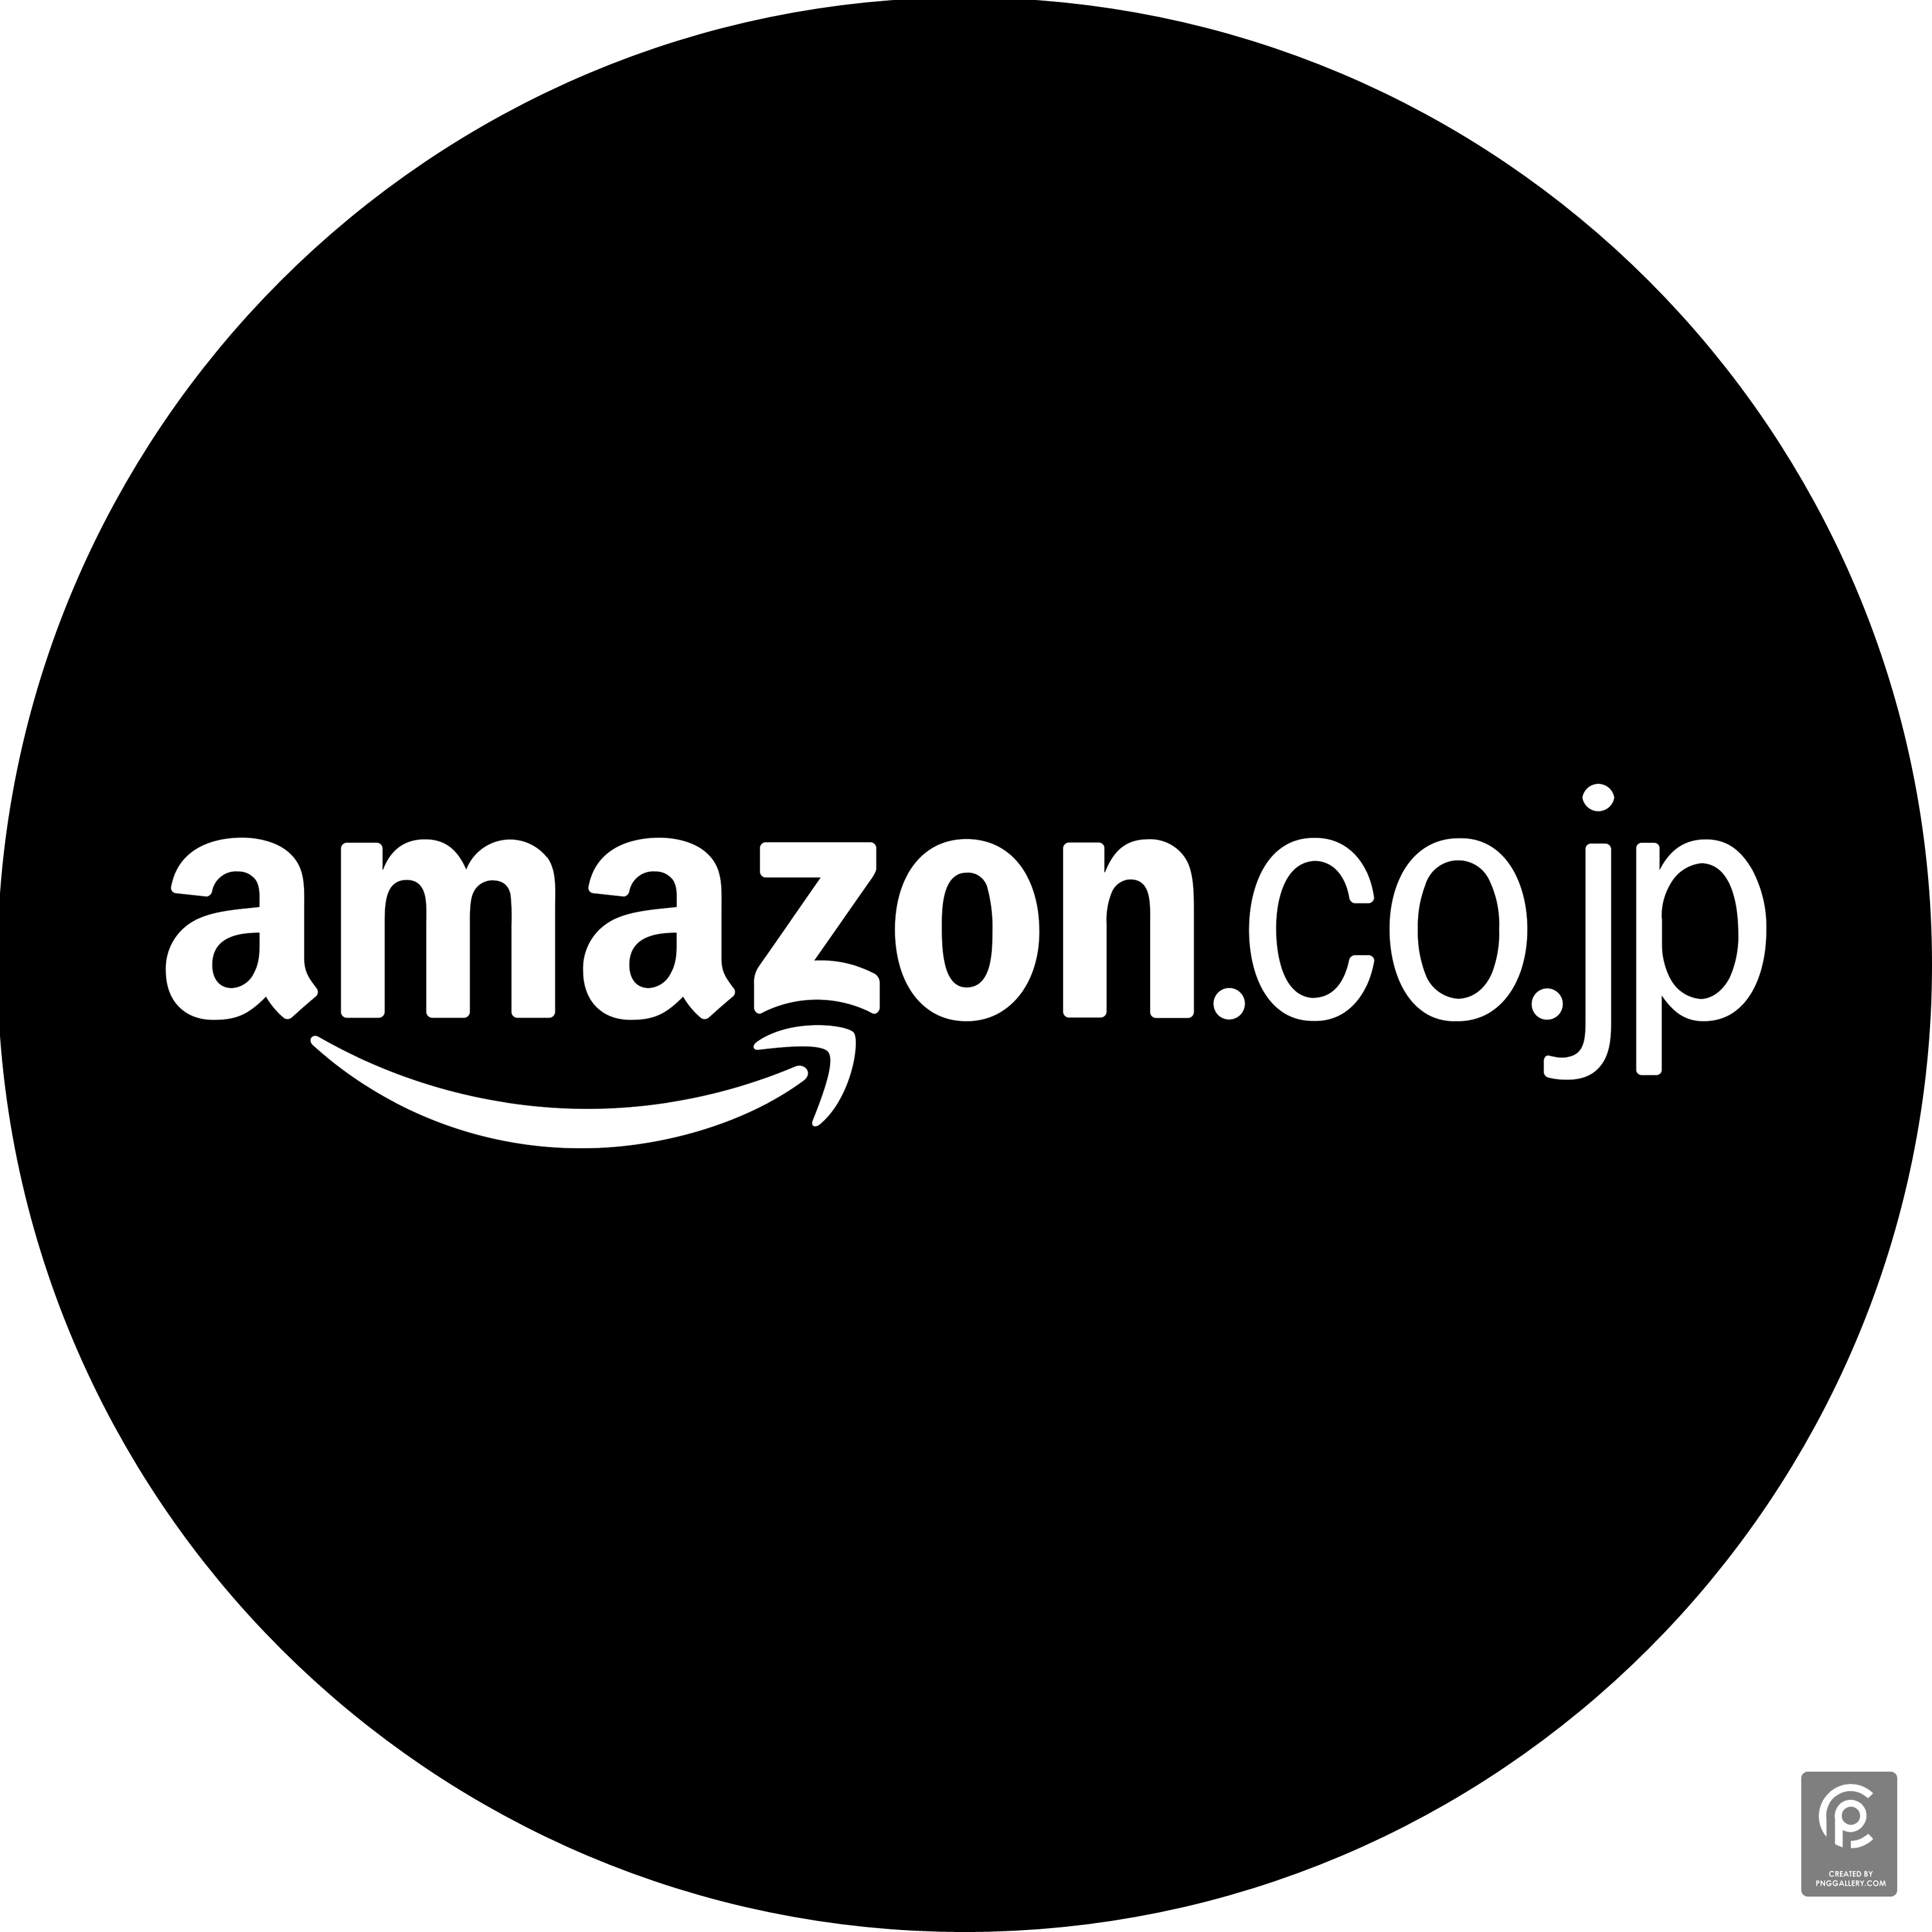 Amazon.co.jp Logo Transparent Gallery